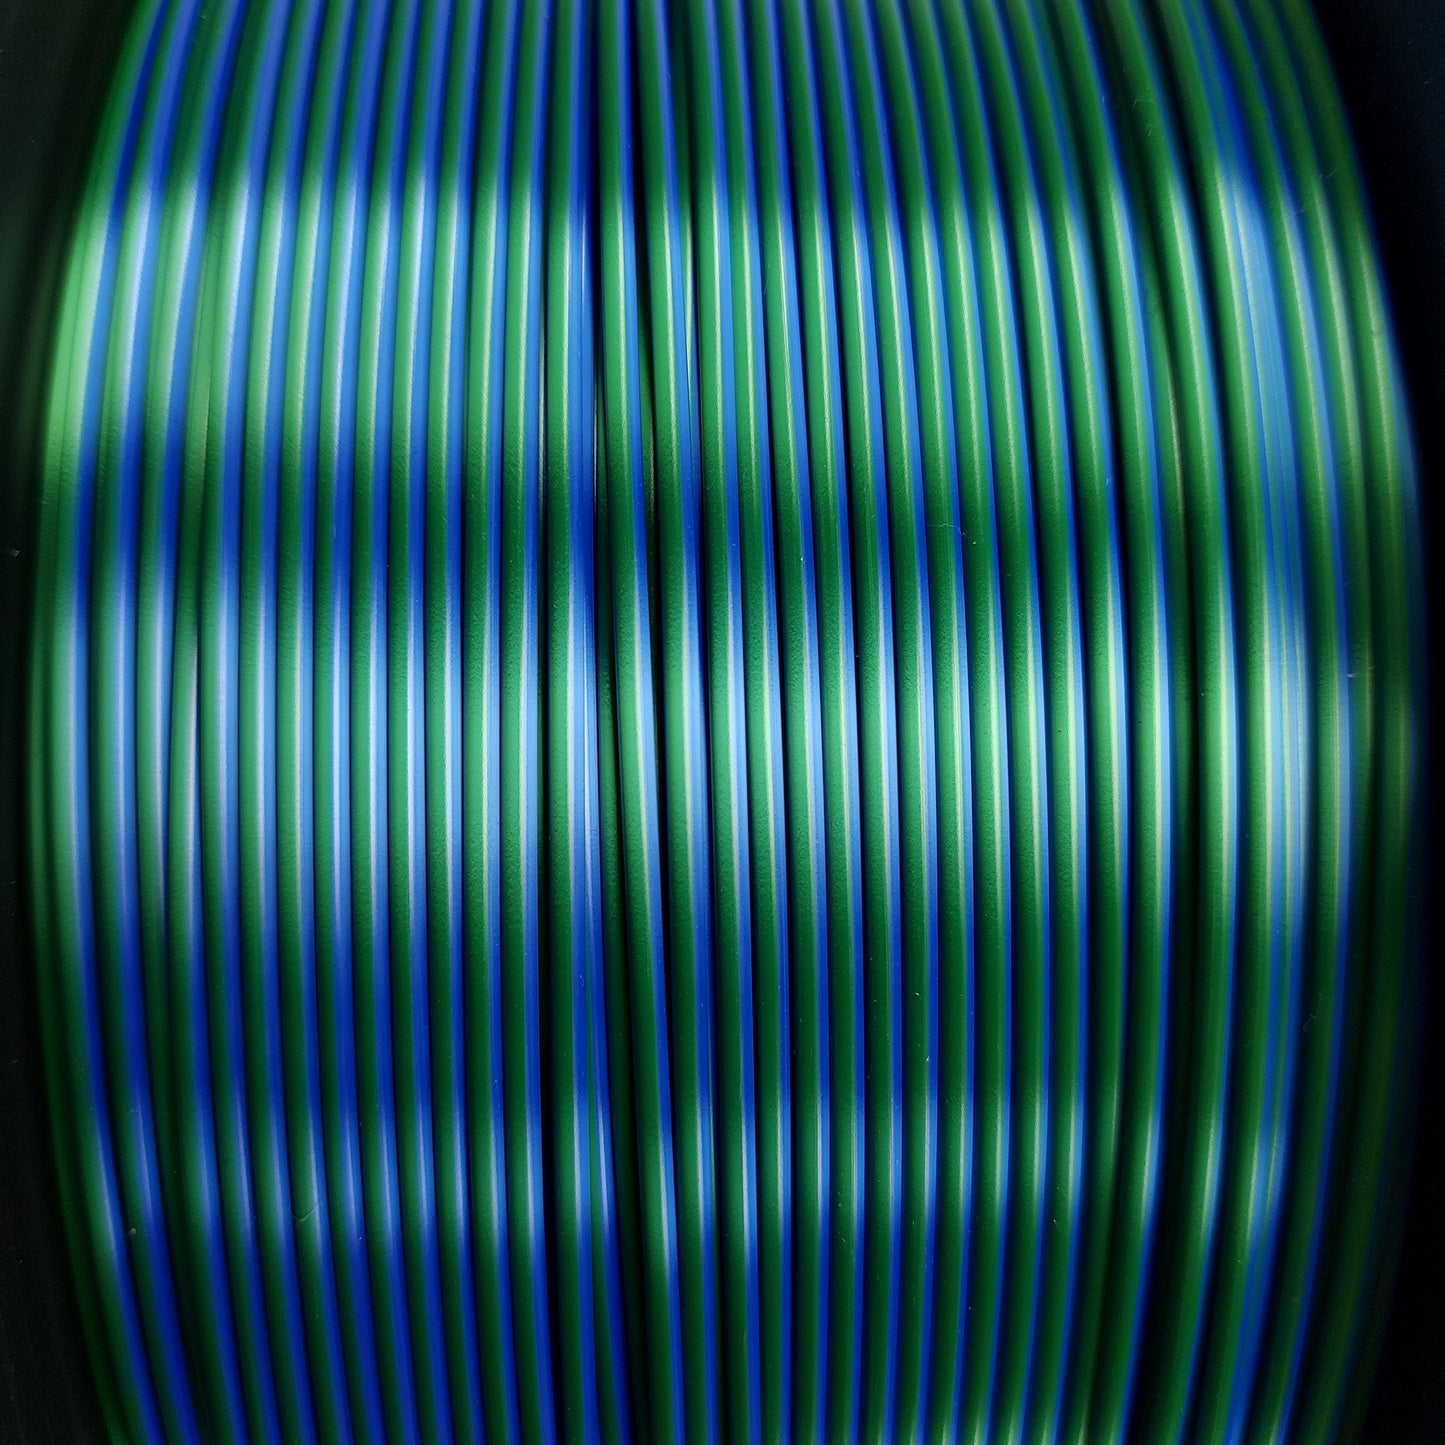 Magic PLA Filament 1,75mm blau-grün